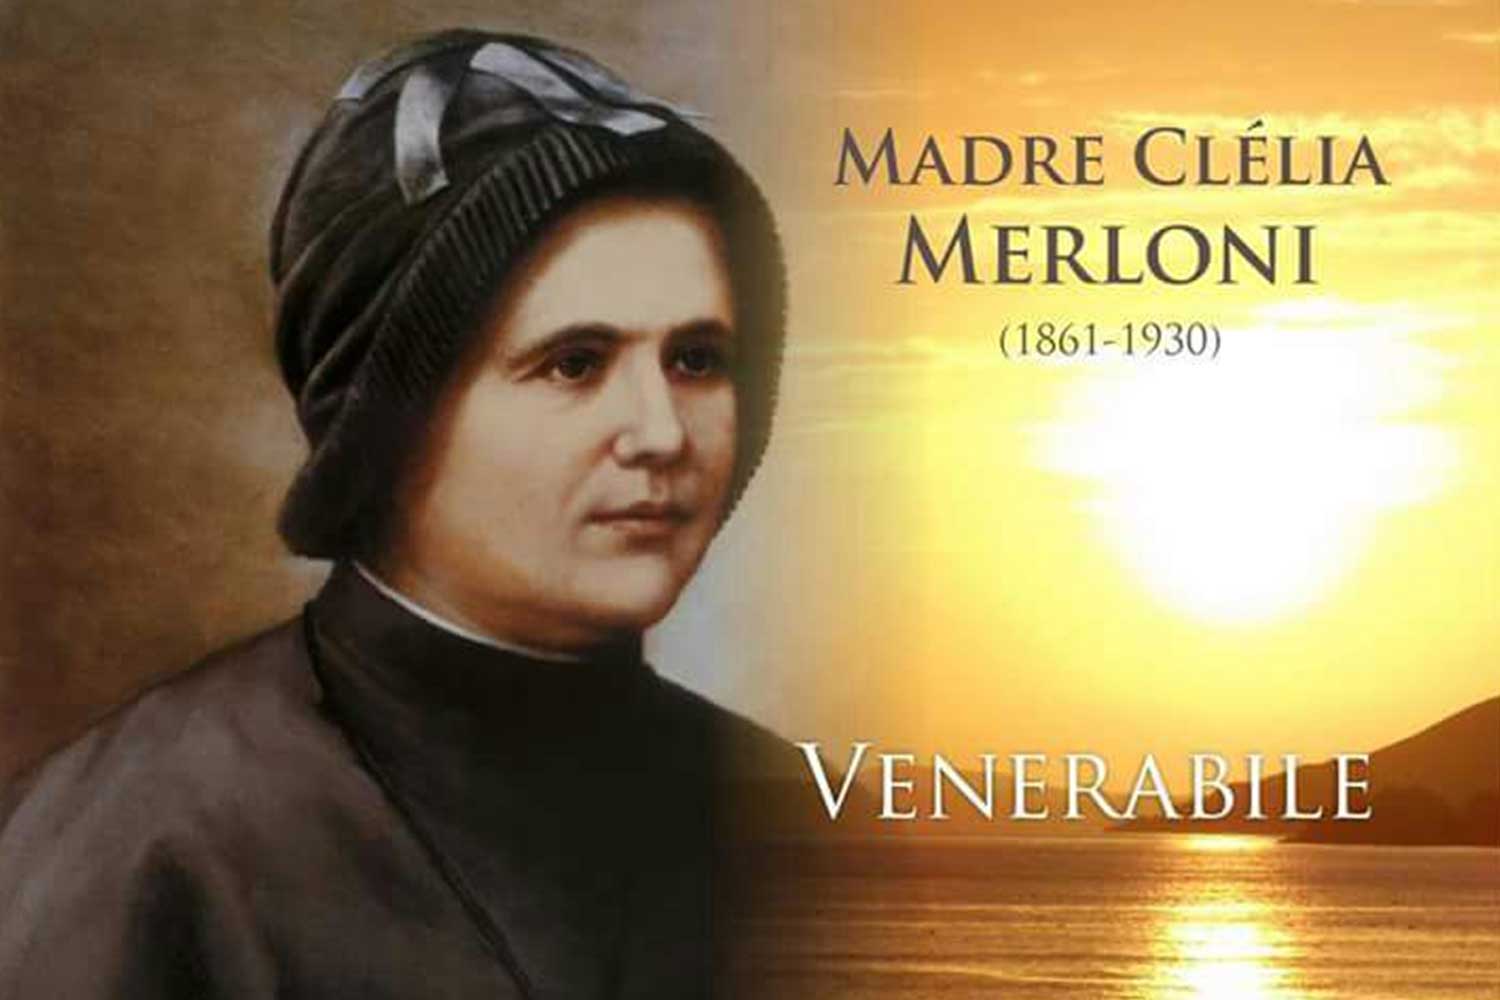 Venerabile - Madre Clelia